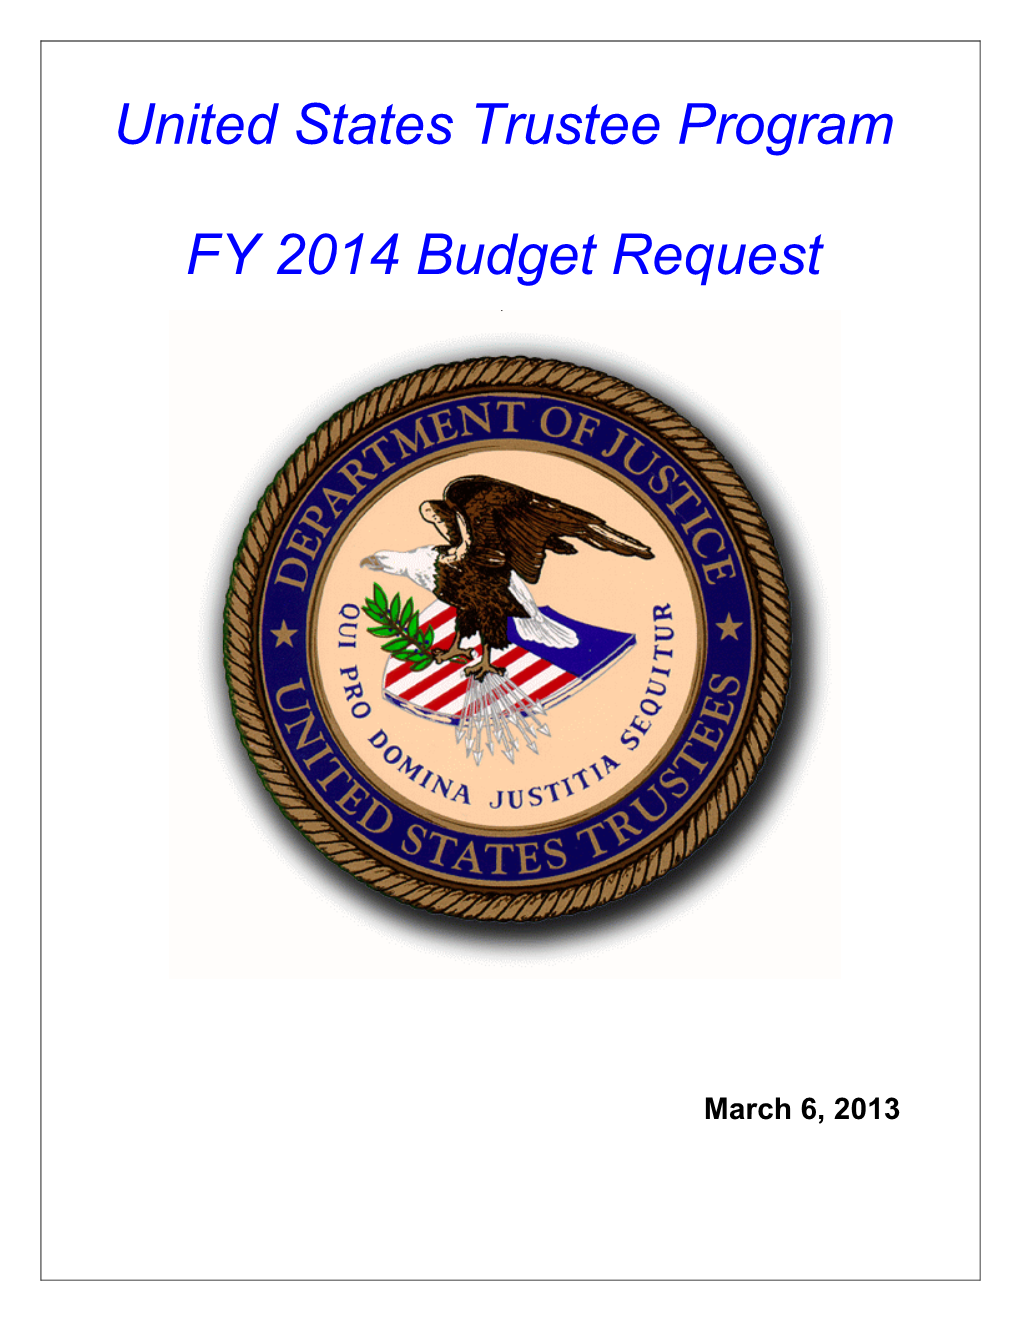 United States Trustee Program FY 2014 Budget Request